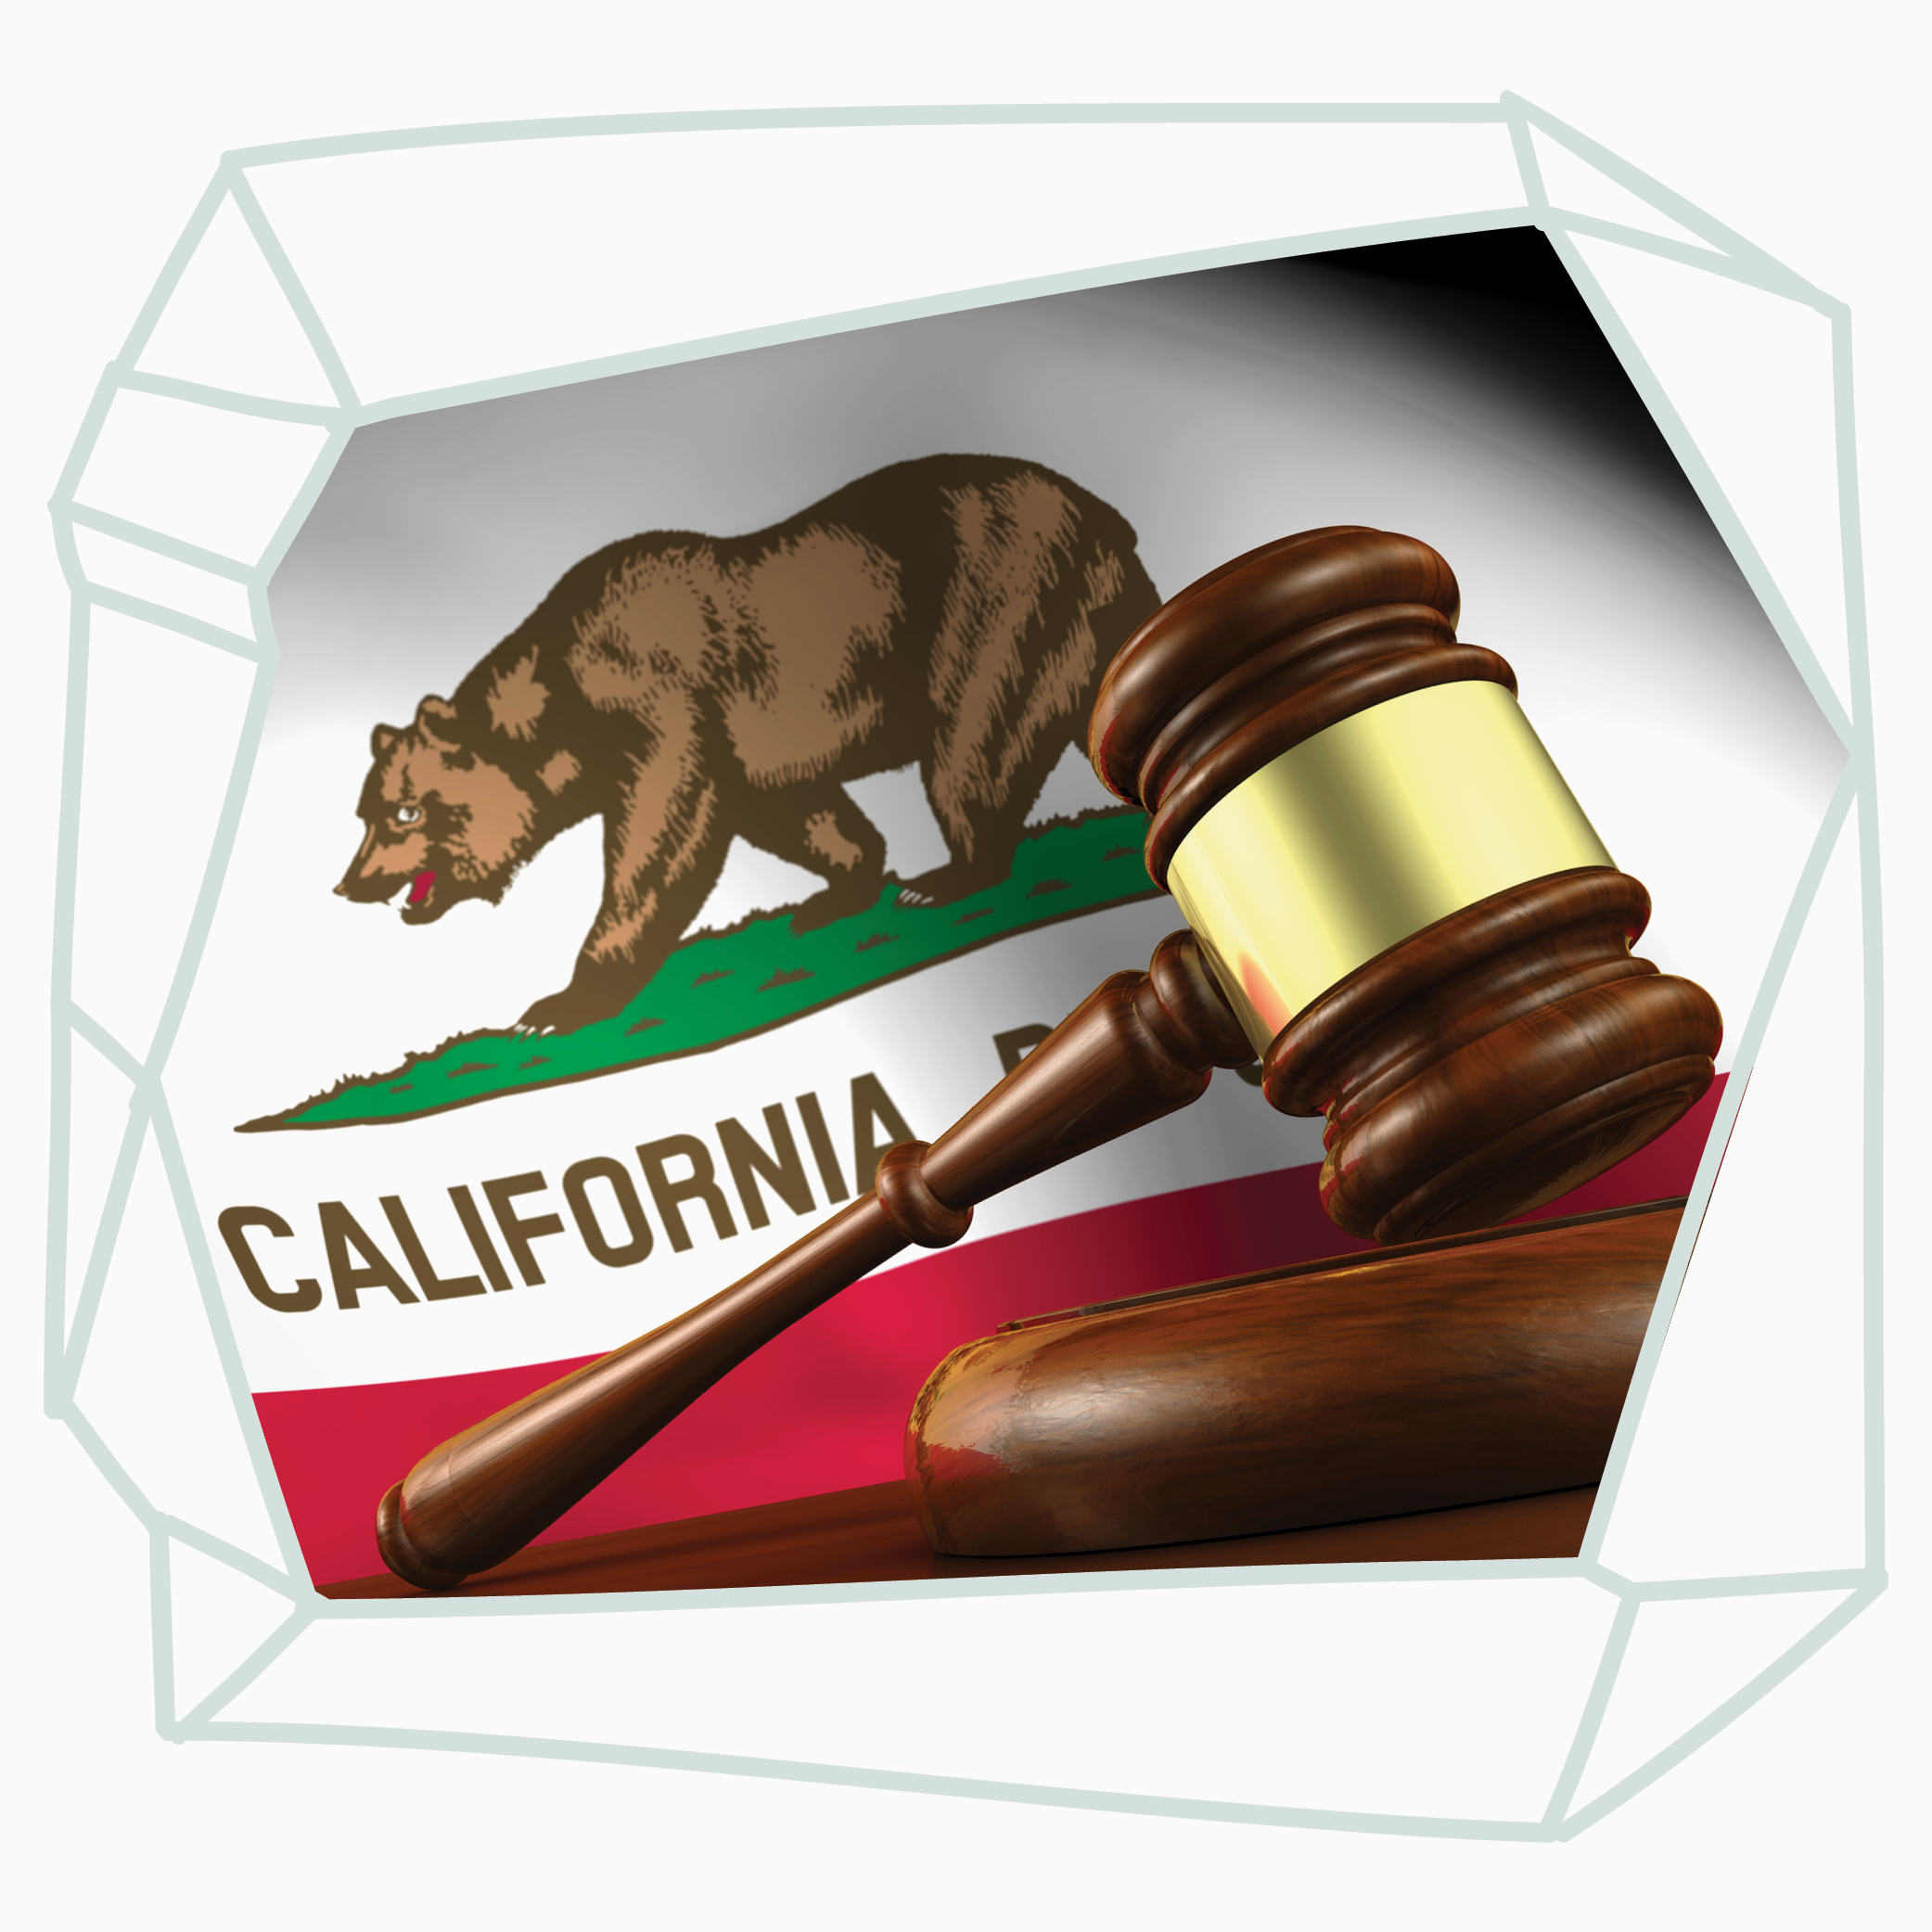 A California flag and gavel